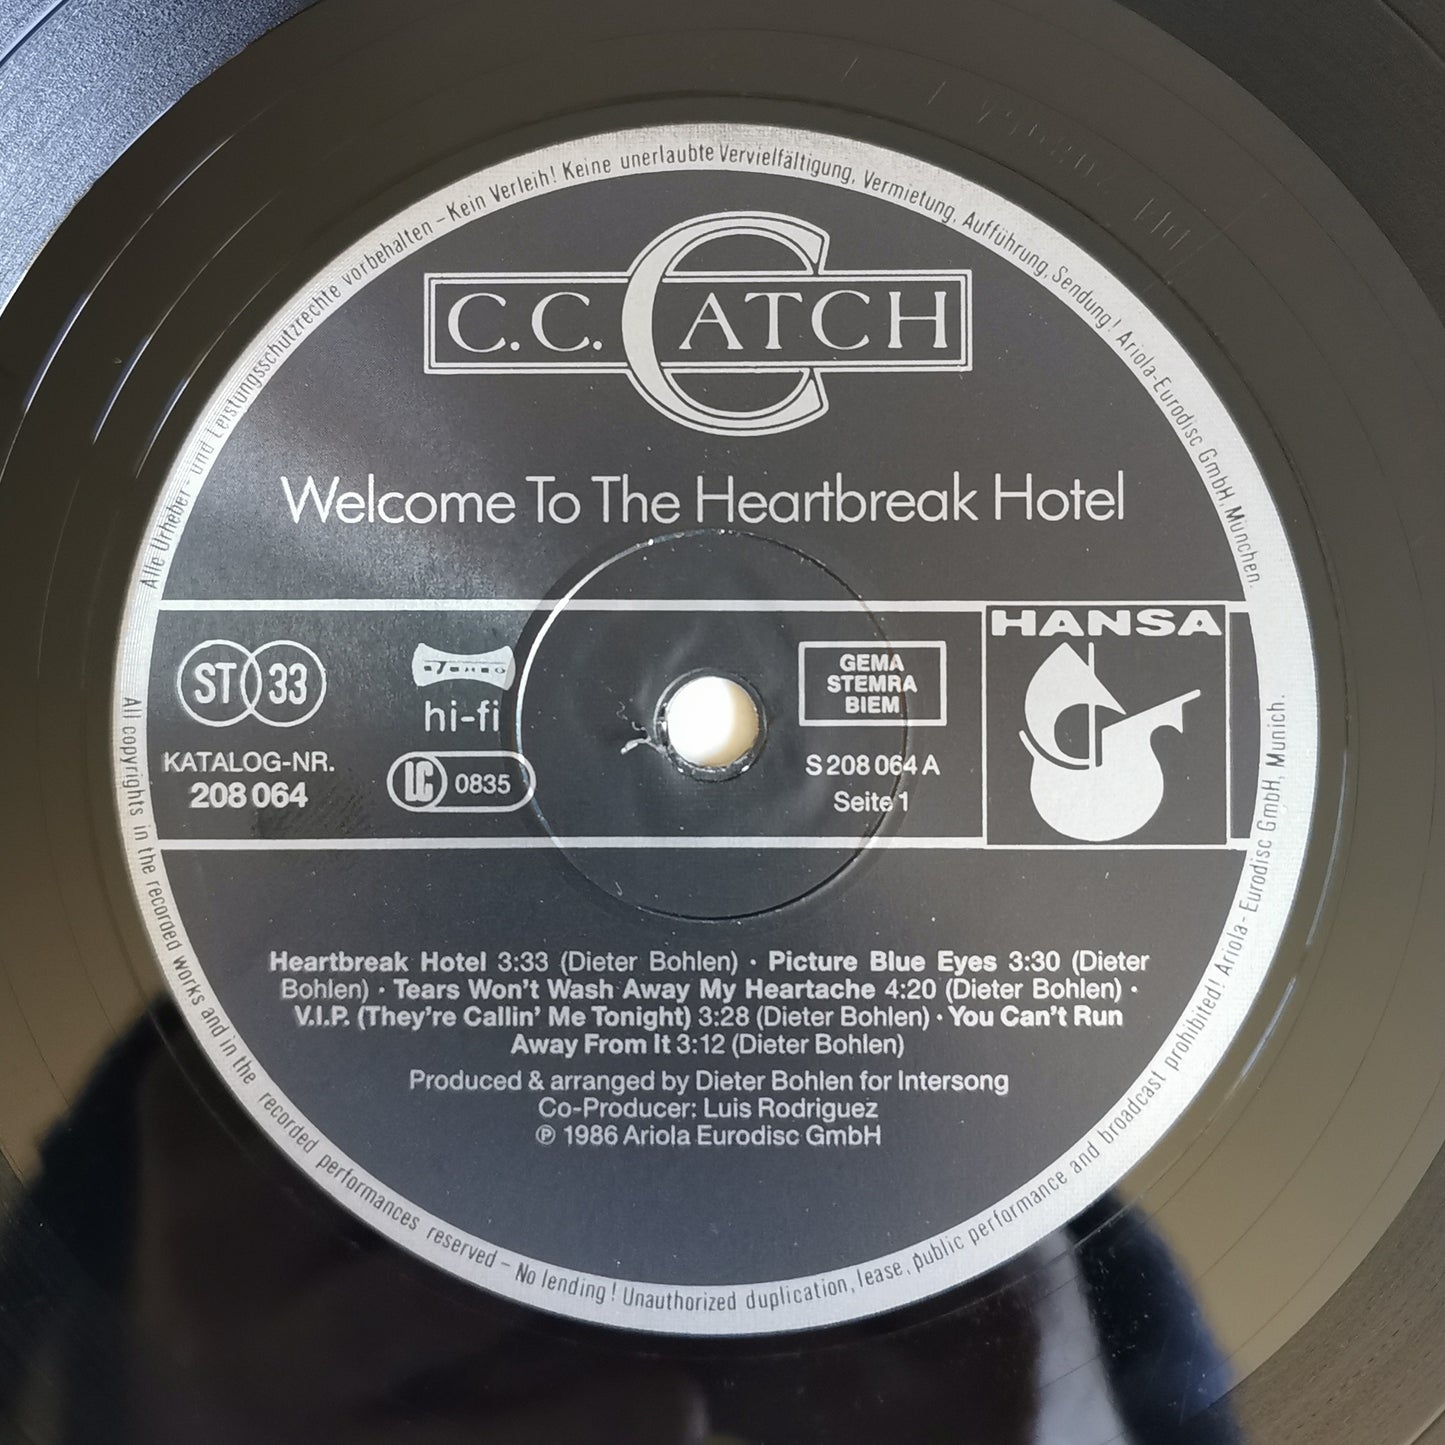 C.C. CATCH - Welcome to the Heartbreak Hotel